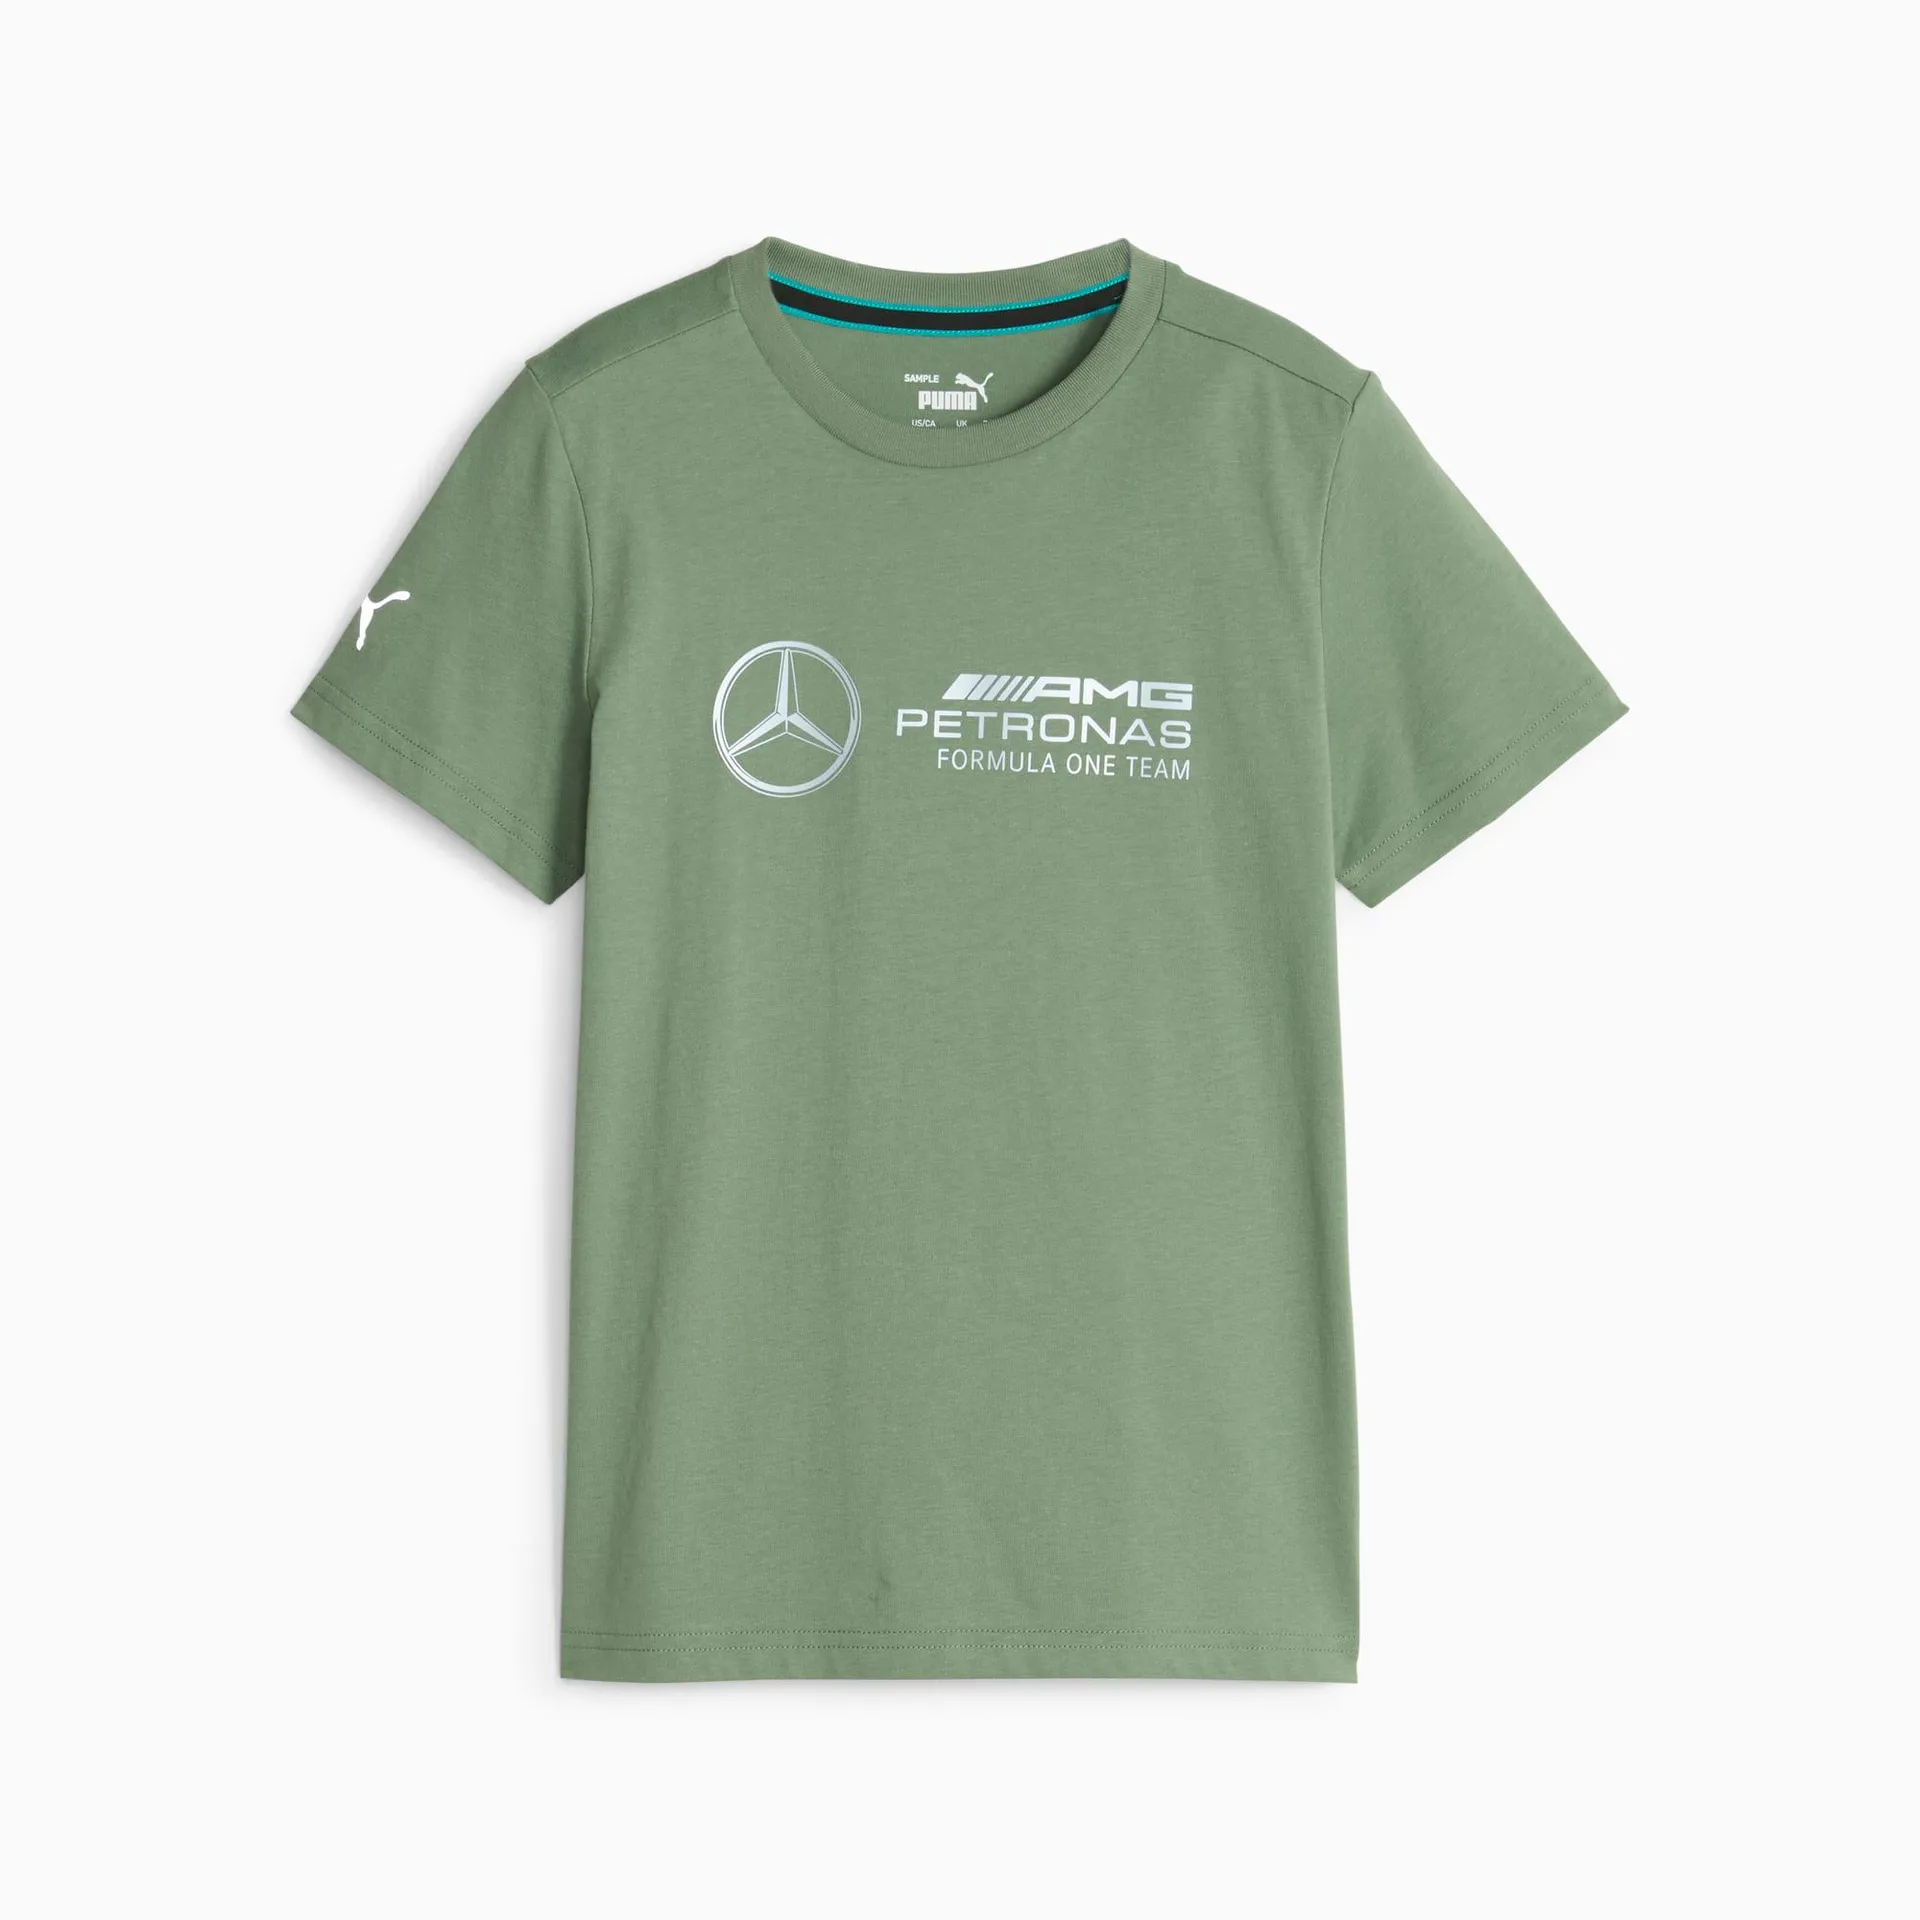 Camiseta juvenil con logotipo Mercedes-AMG Petronas Motorsport